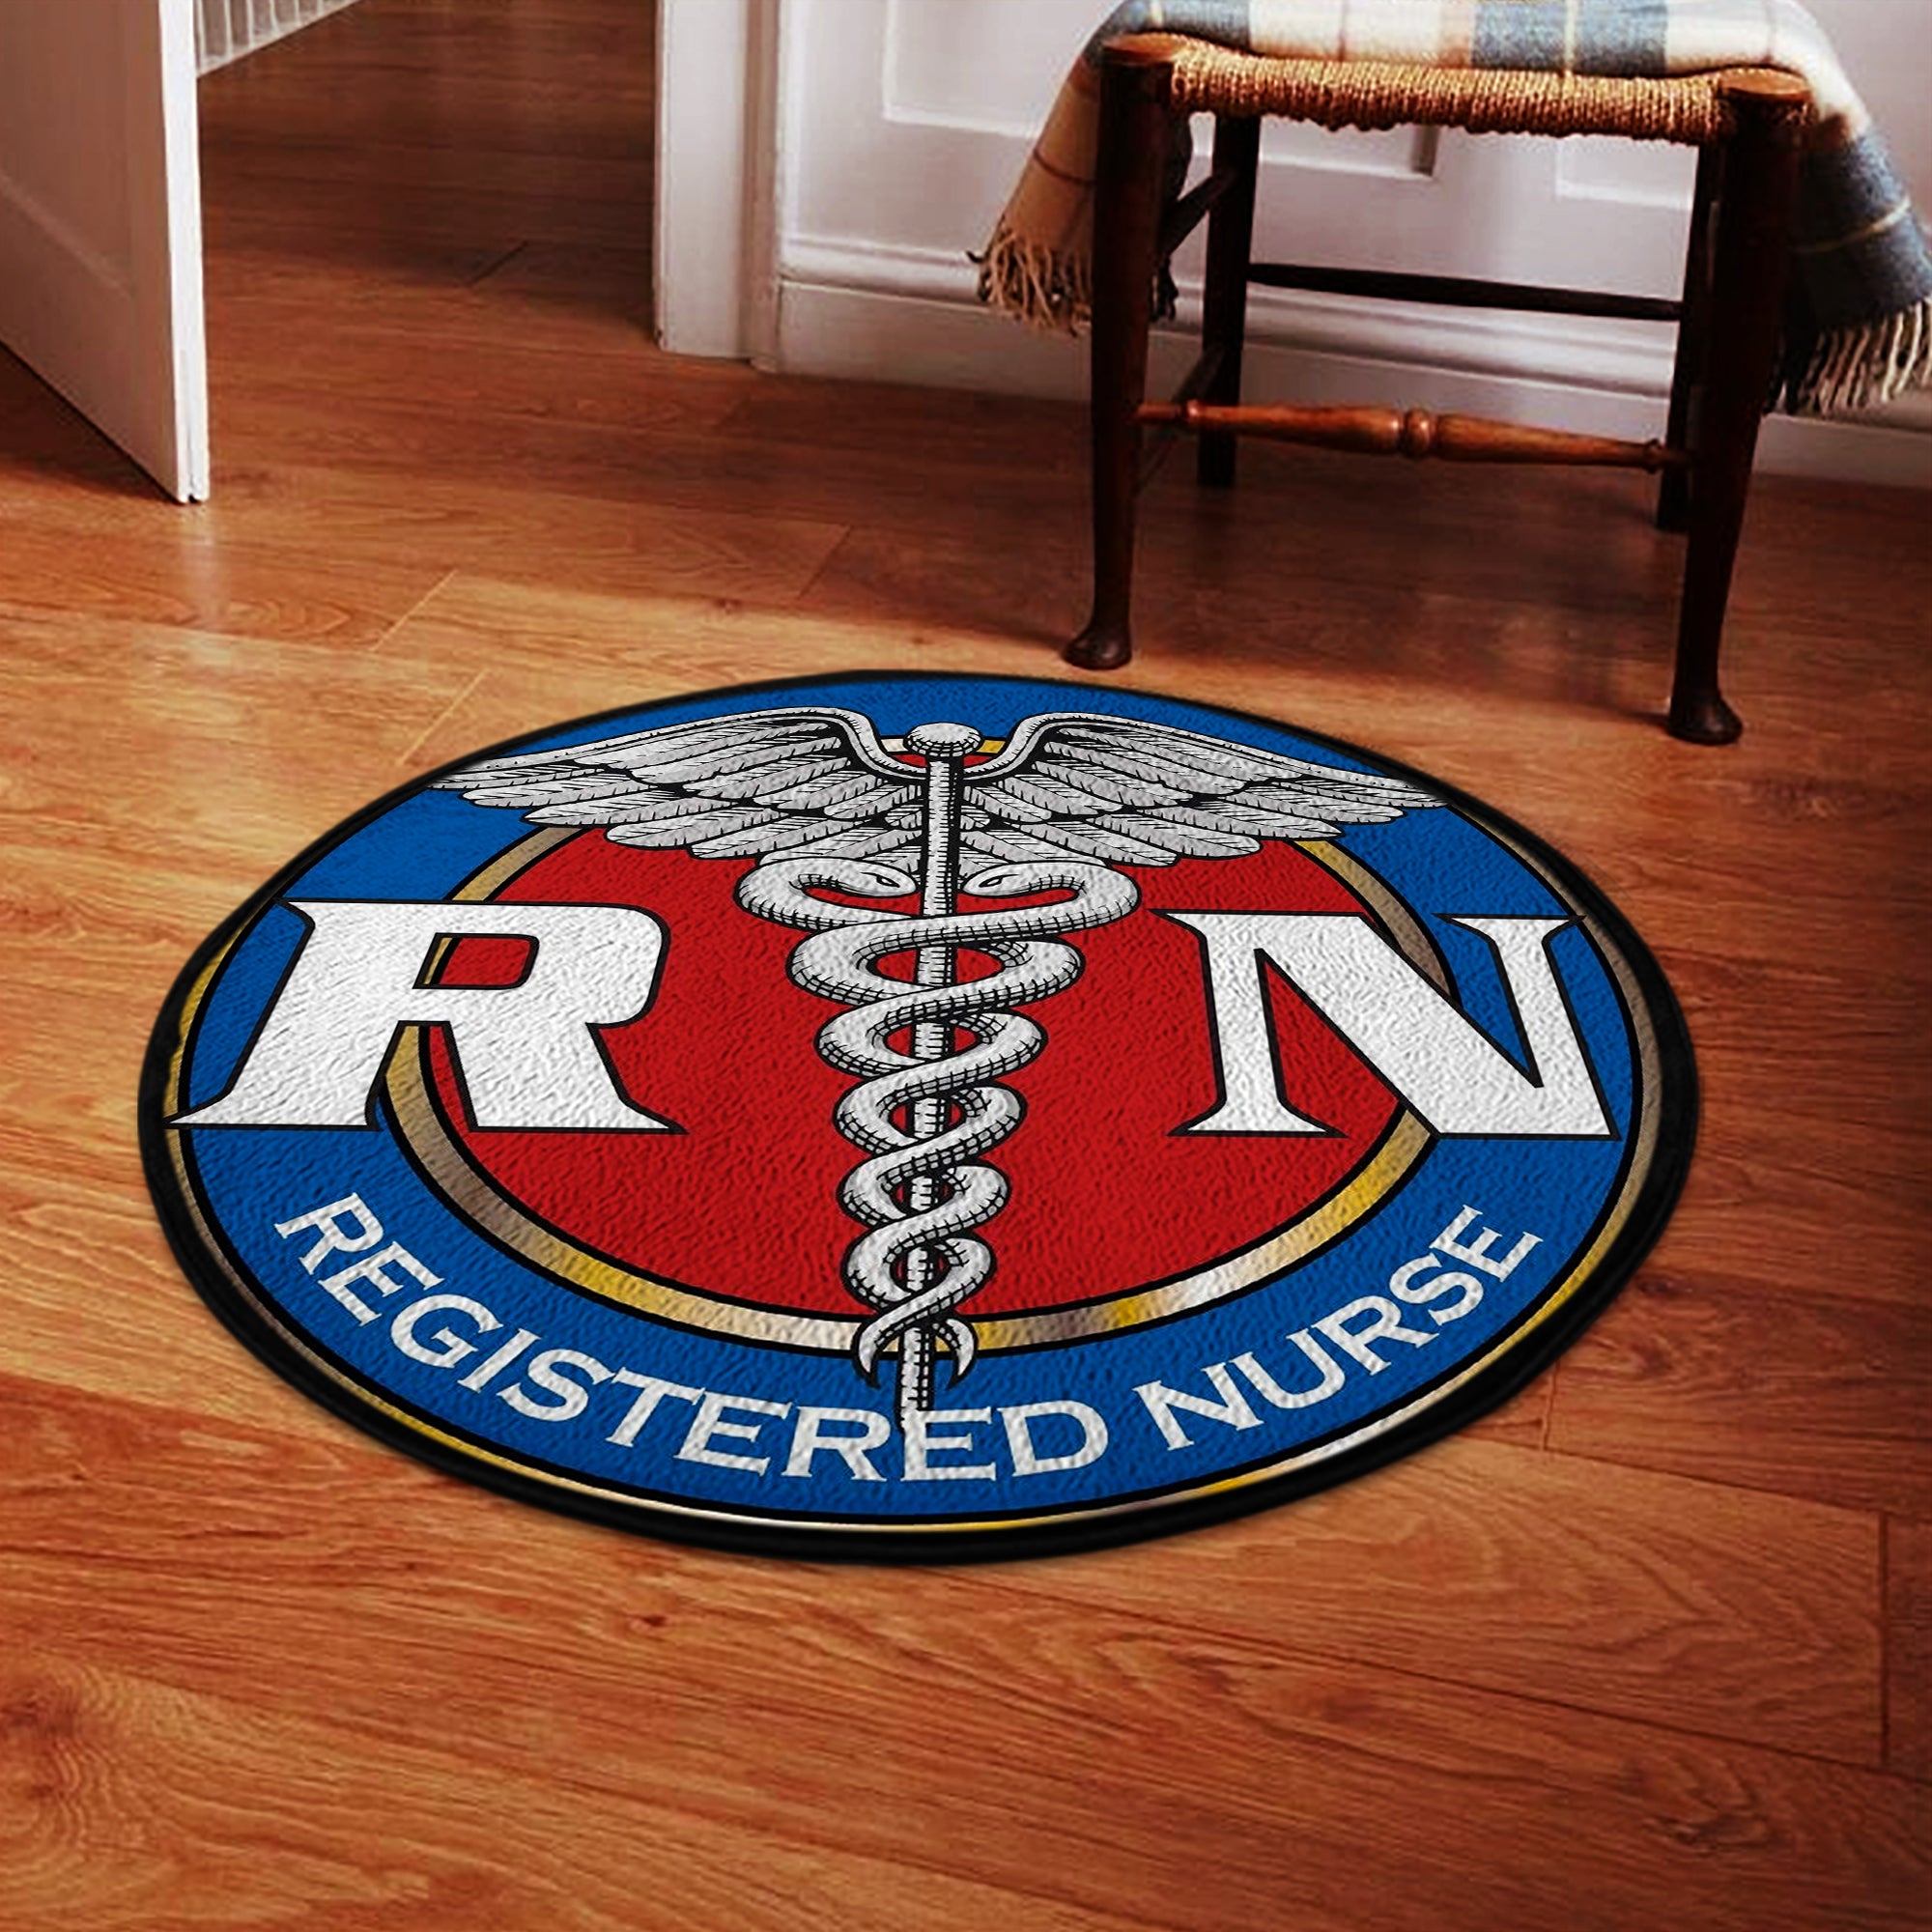 Registered Nurse Logo Round Rug 04911